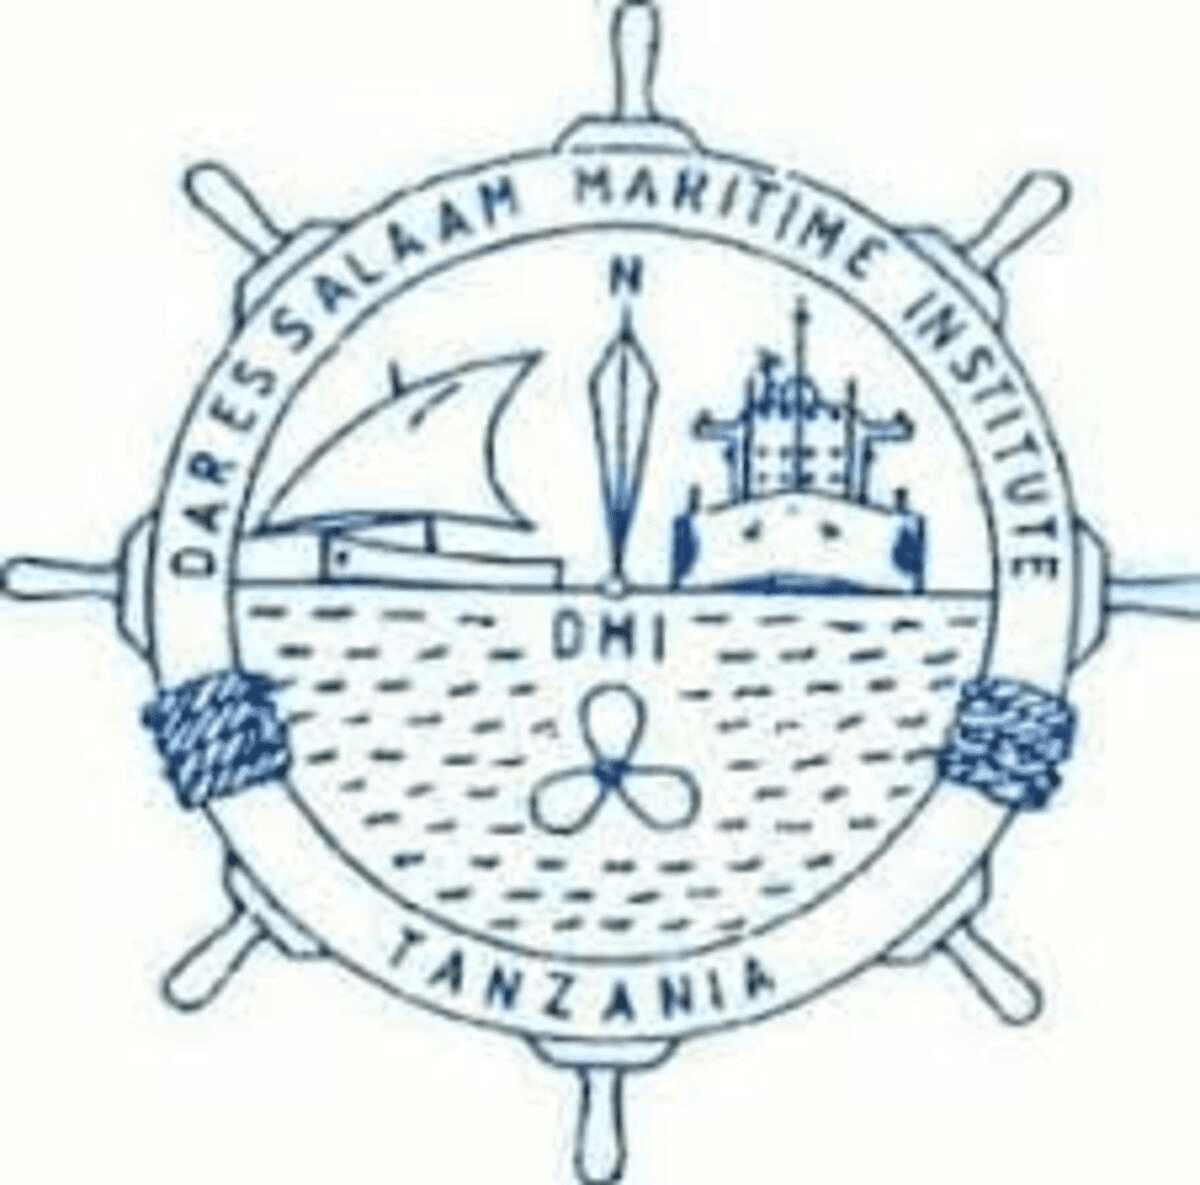 Job Vacancies at Dar es Salaam Maritime Institute (DMI) 2022, DMI Vacancies 2022, Nafasi za kazi Dar es Salaam Maritime Institute DMI 2022, Ajira Mpya Dar es Salaam Maritime Institute (DMI), Nafasi za kazi DMI Tanzania 2022